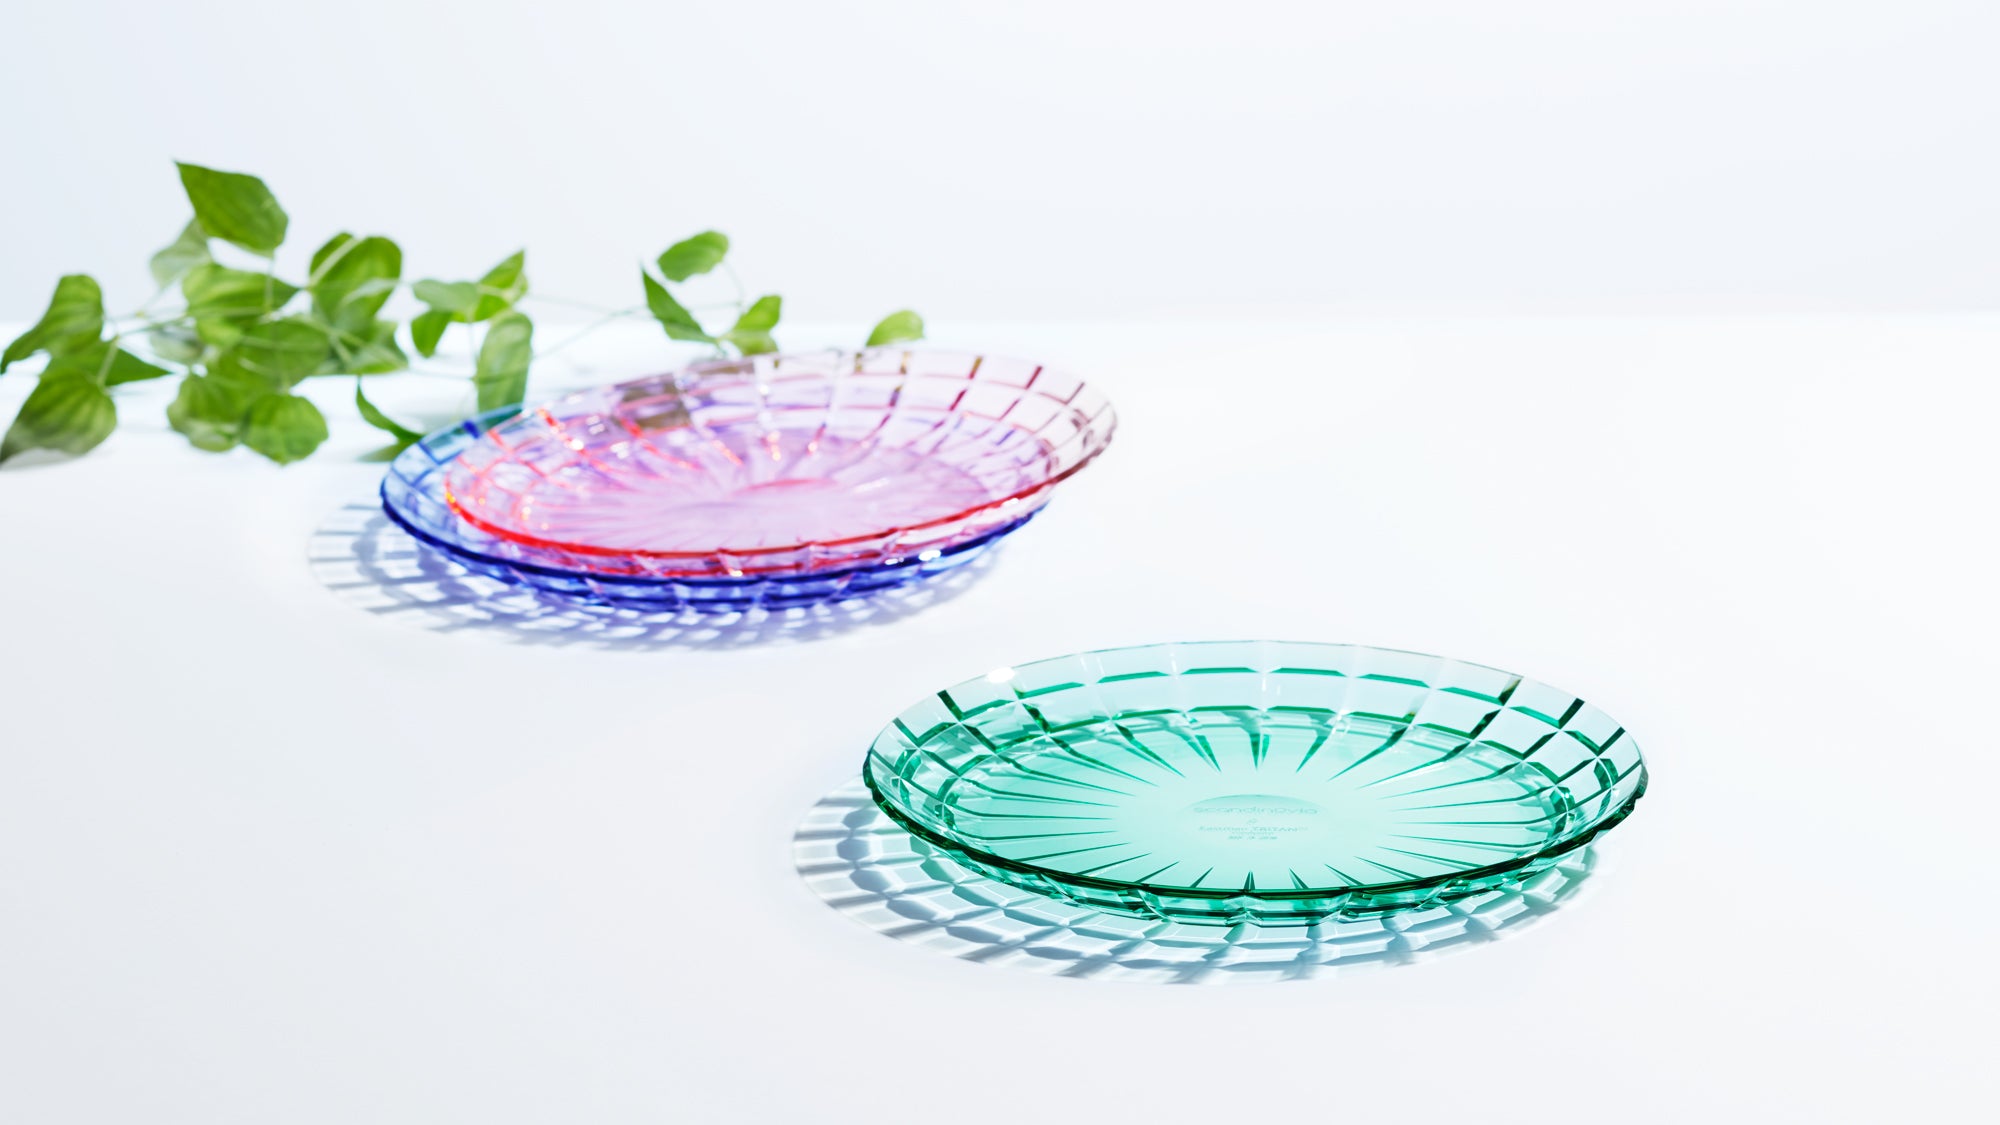 8 oz Unbreakable Premium Juice Glasses - Set of 4 - Tritan Plastic Cups -  BPA Free - 100% Made in Japan (Assorted Colors) - UPC:641945603392